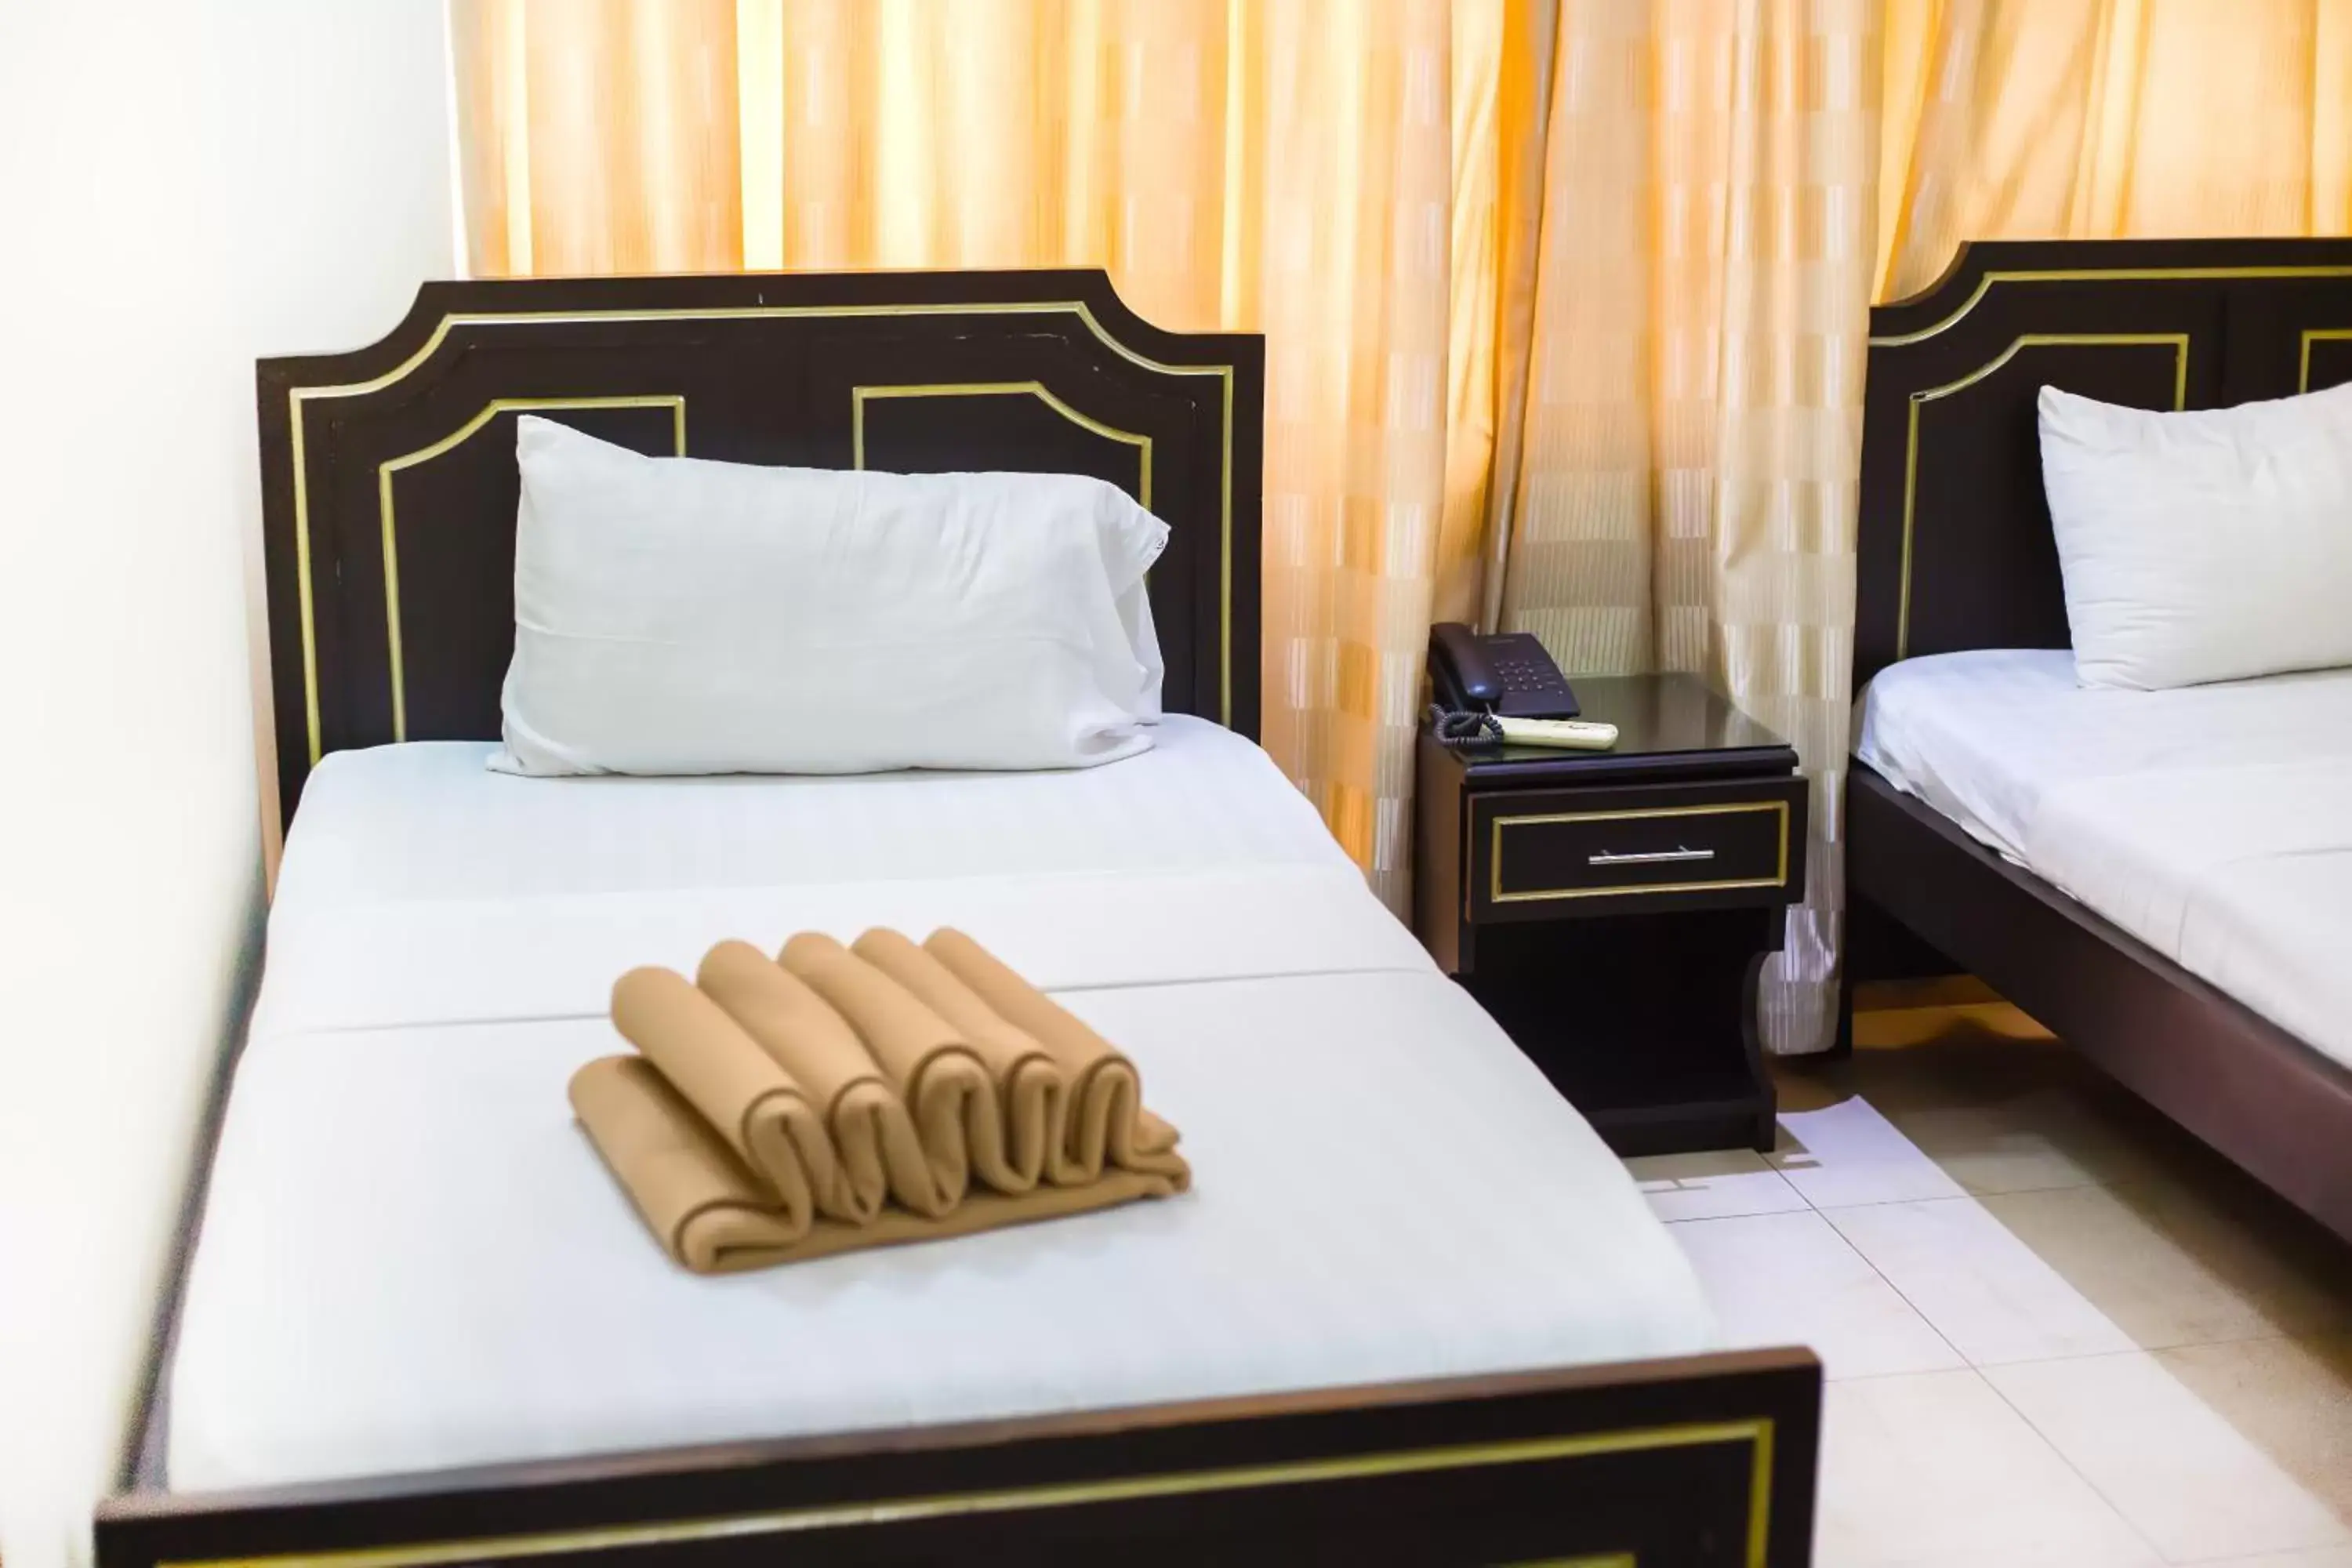 Bed in Sleep Inn Hotel - Kariakoo